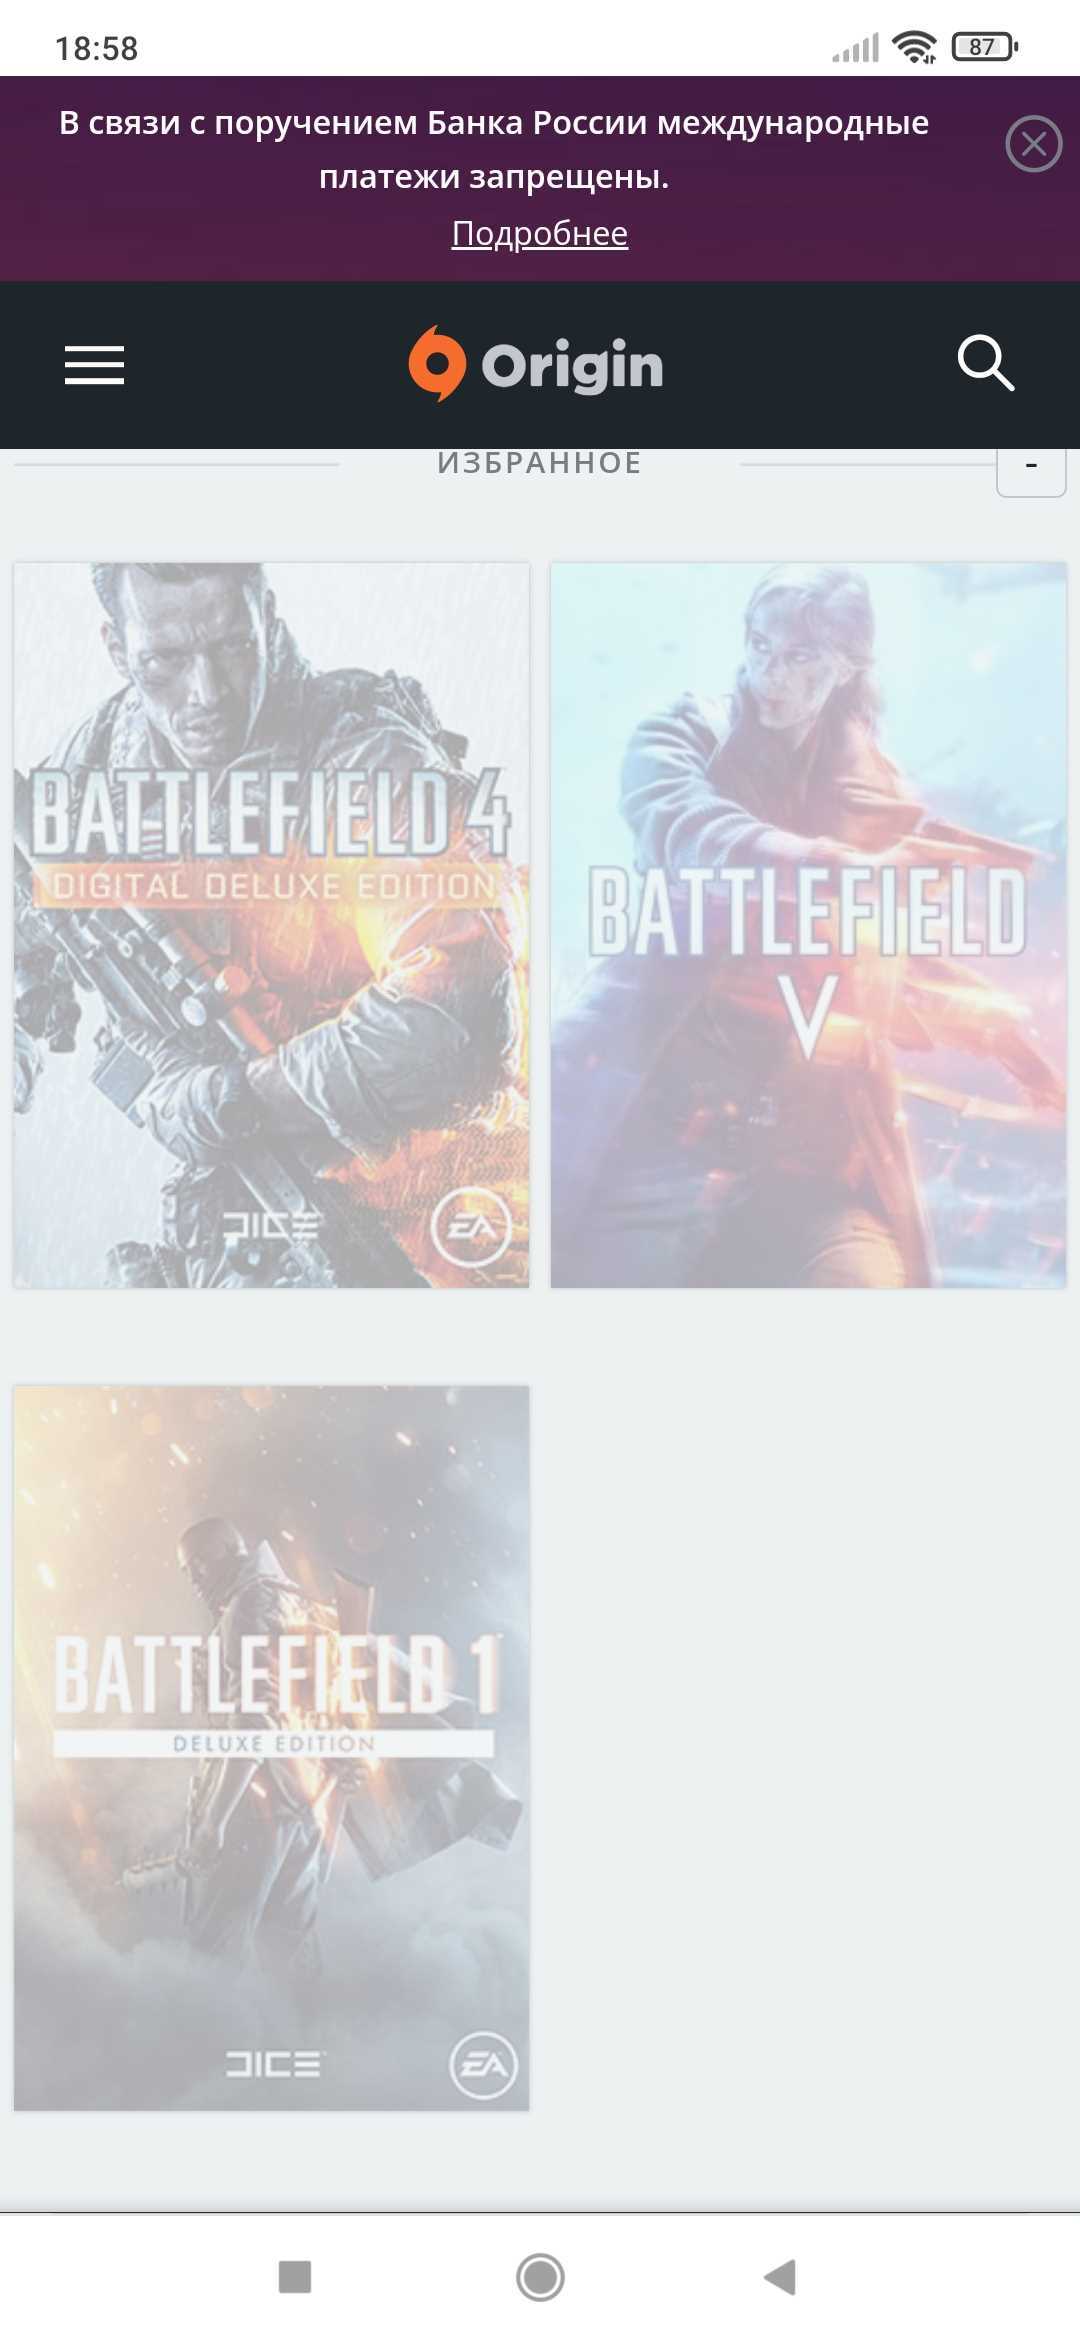 Penjualan akun permainan Battlefield